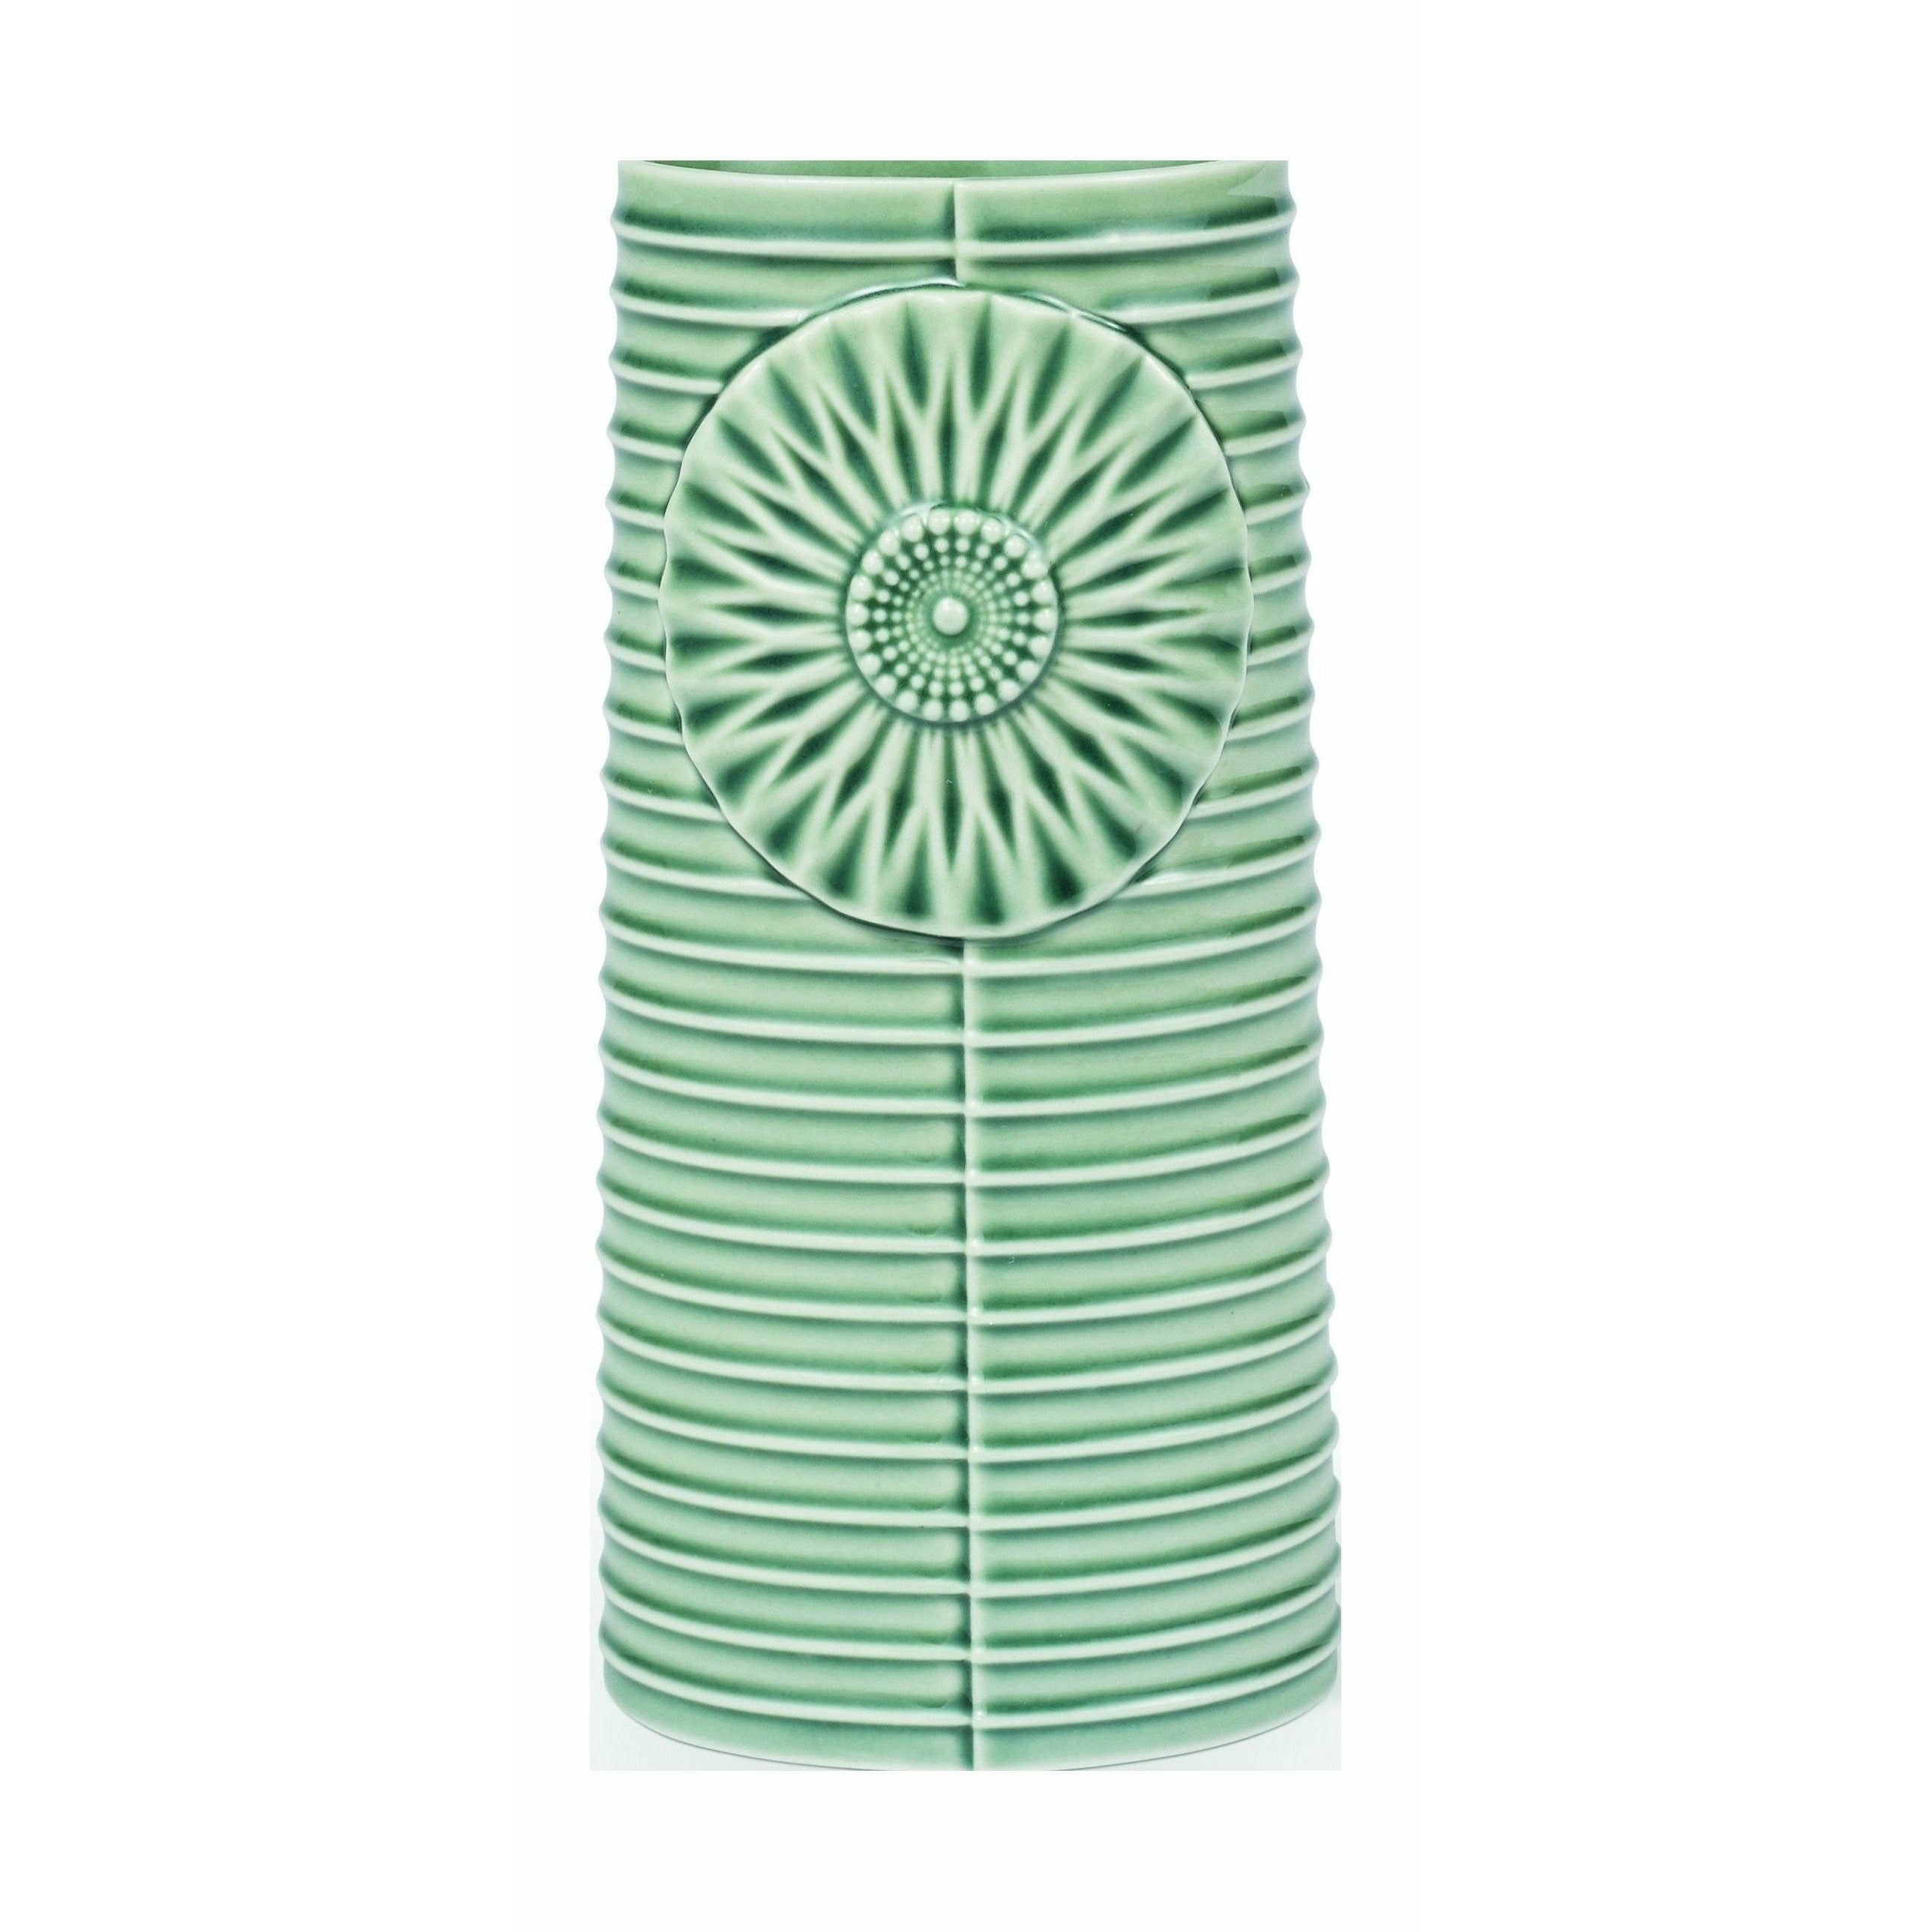 Dottir pipanella lijnen vaas ovaal groen, 18,1 cm